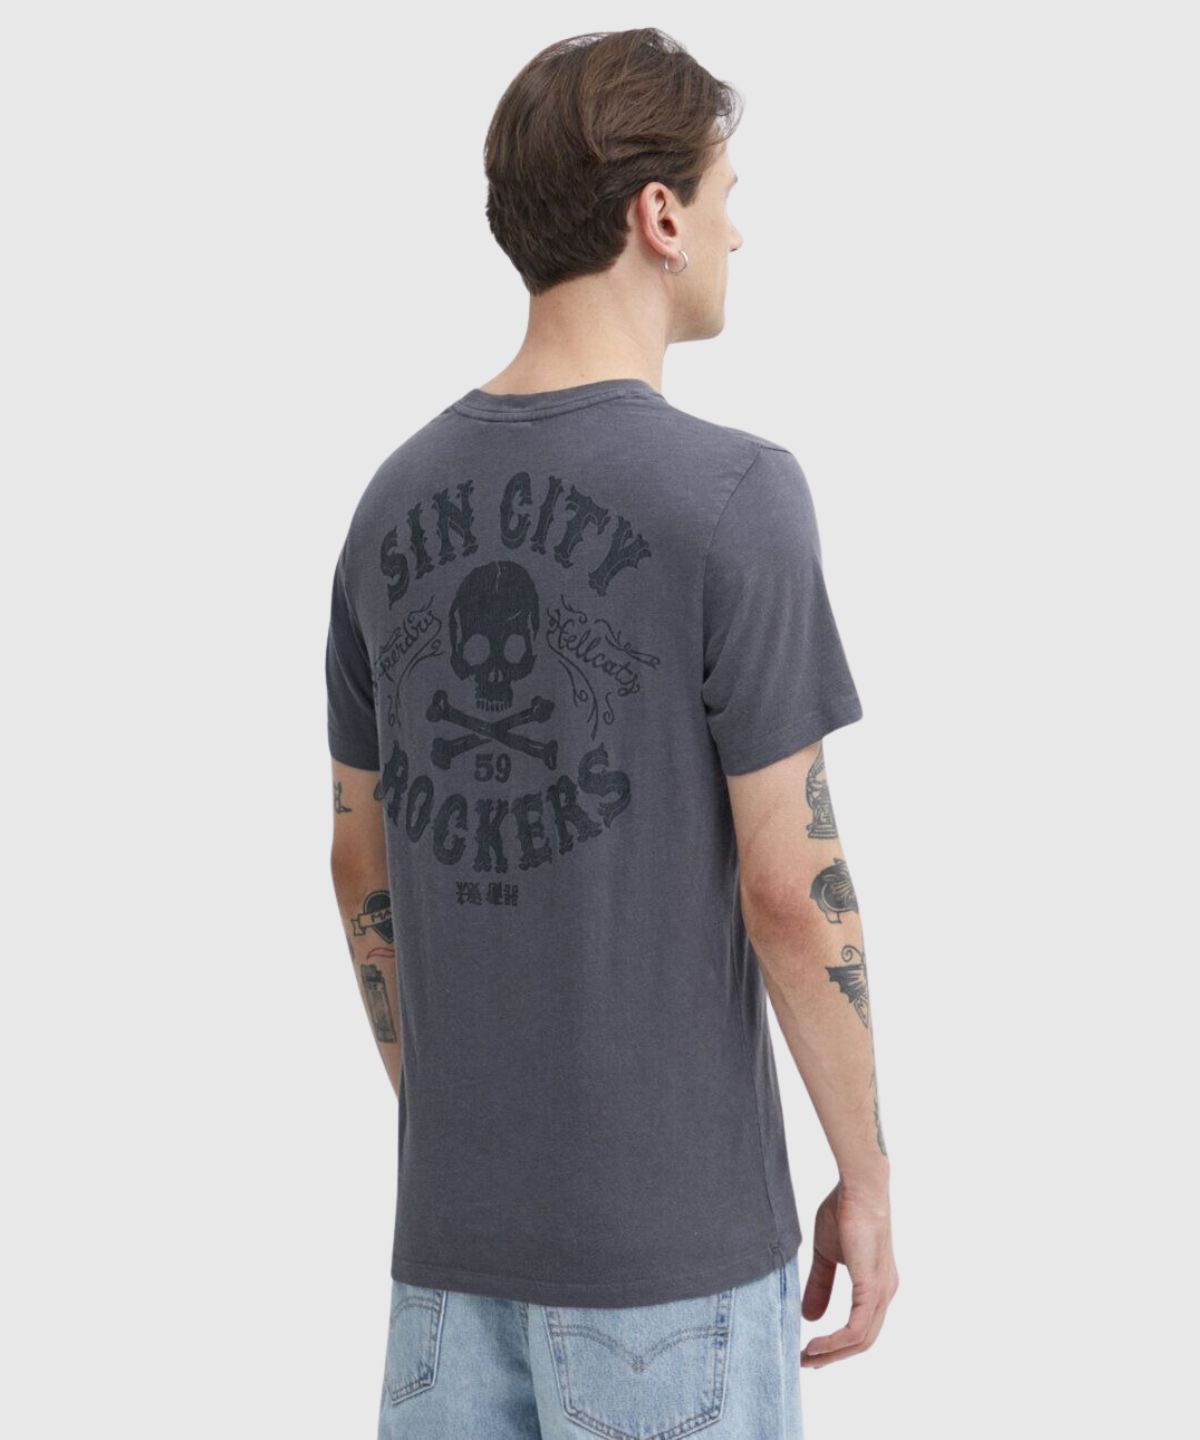 Retro Rocker Graphic T Shirt